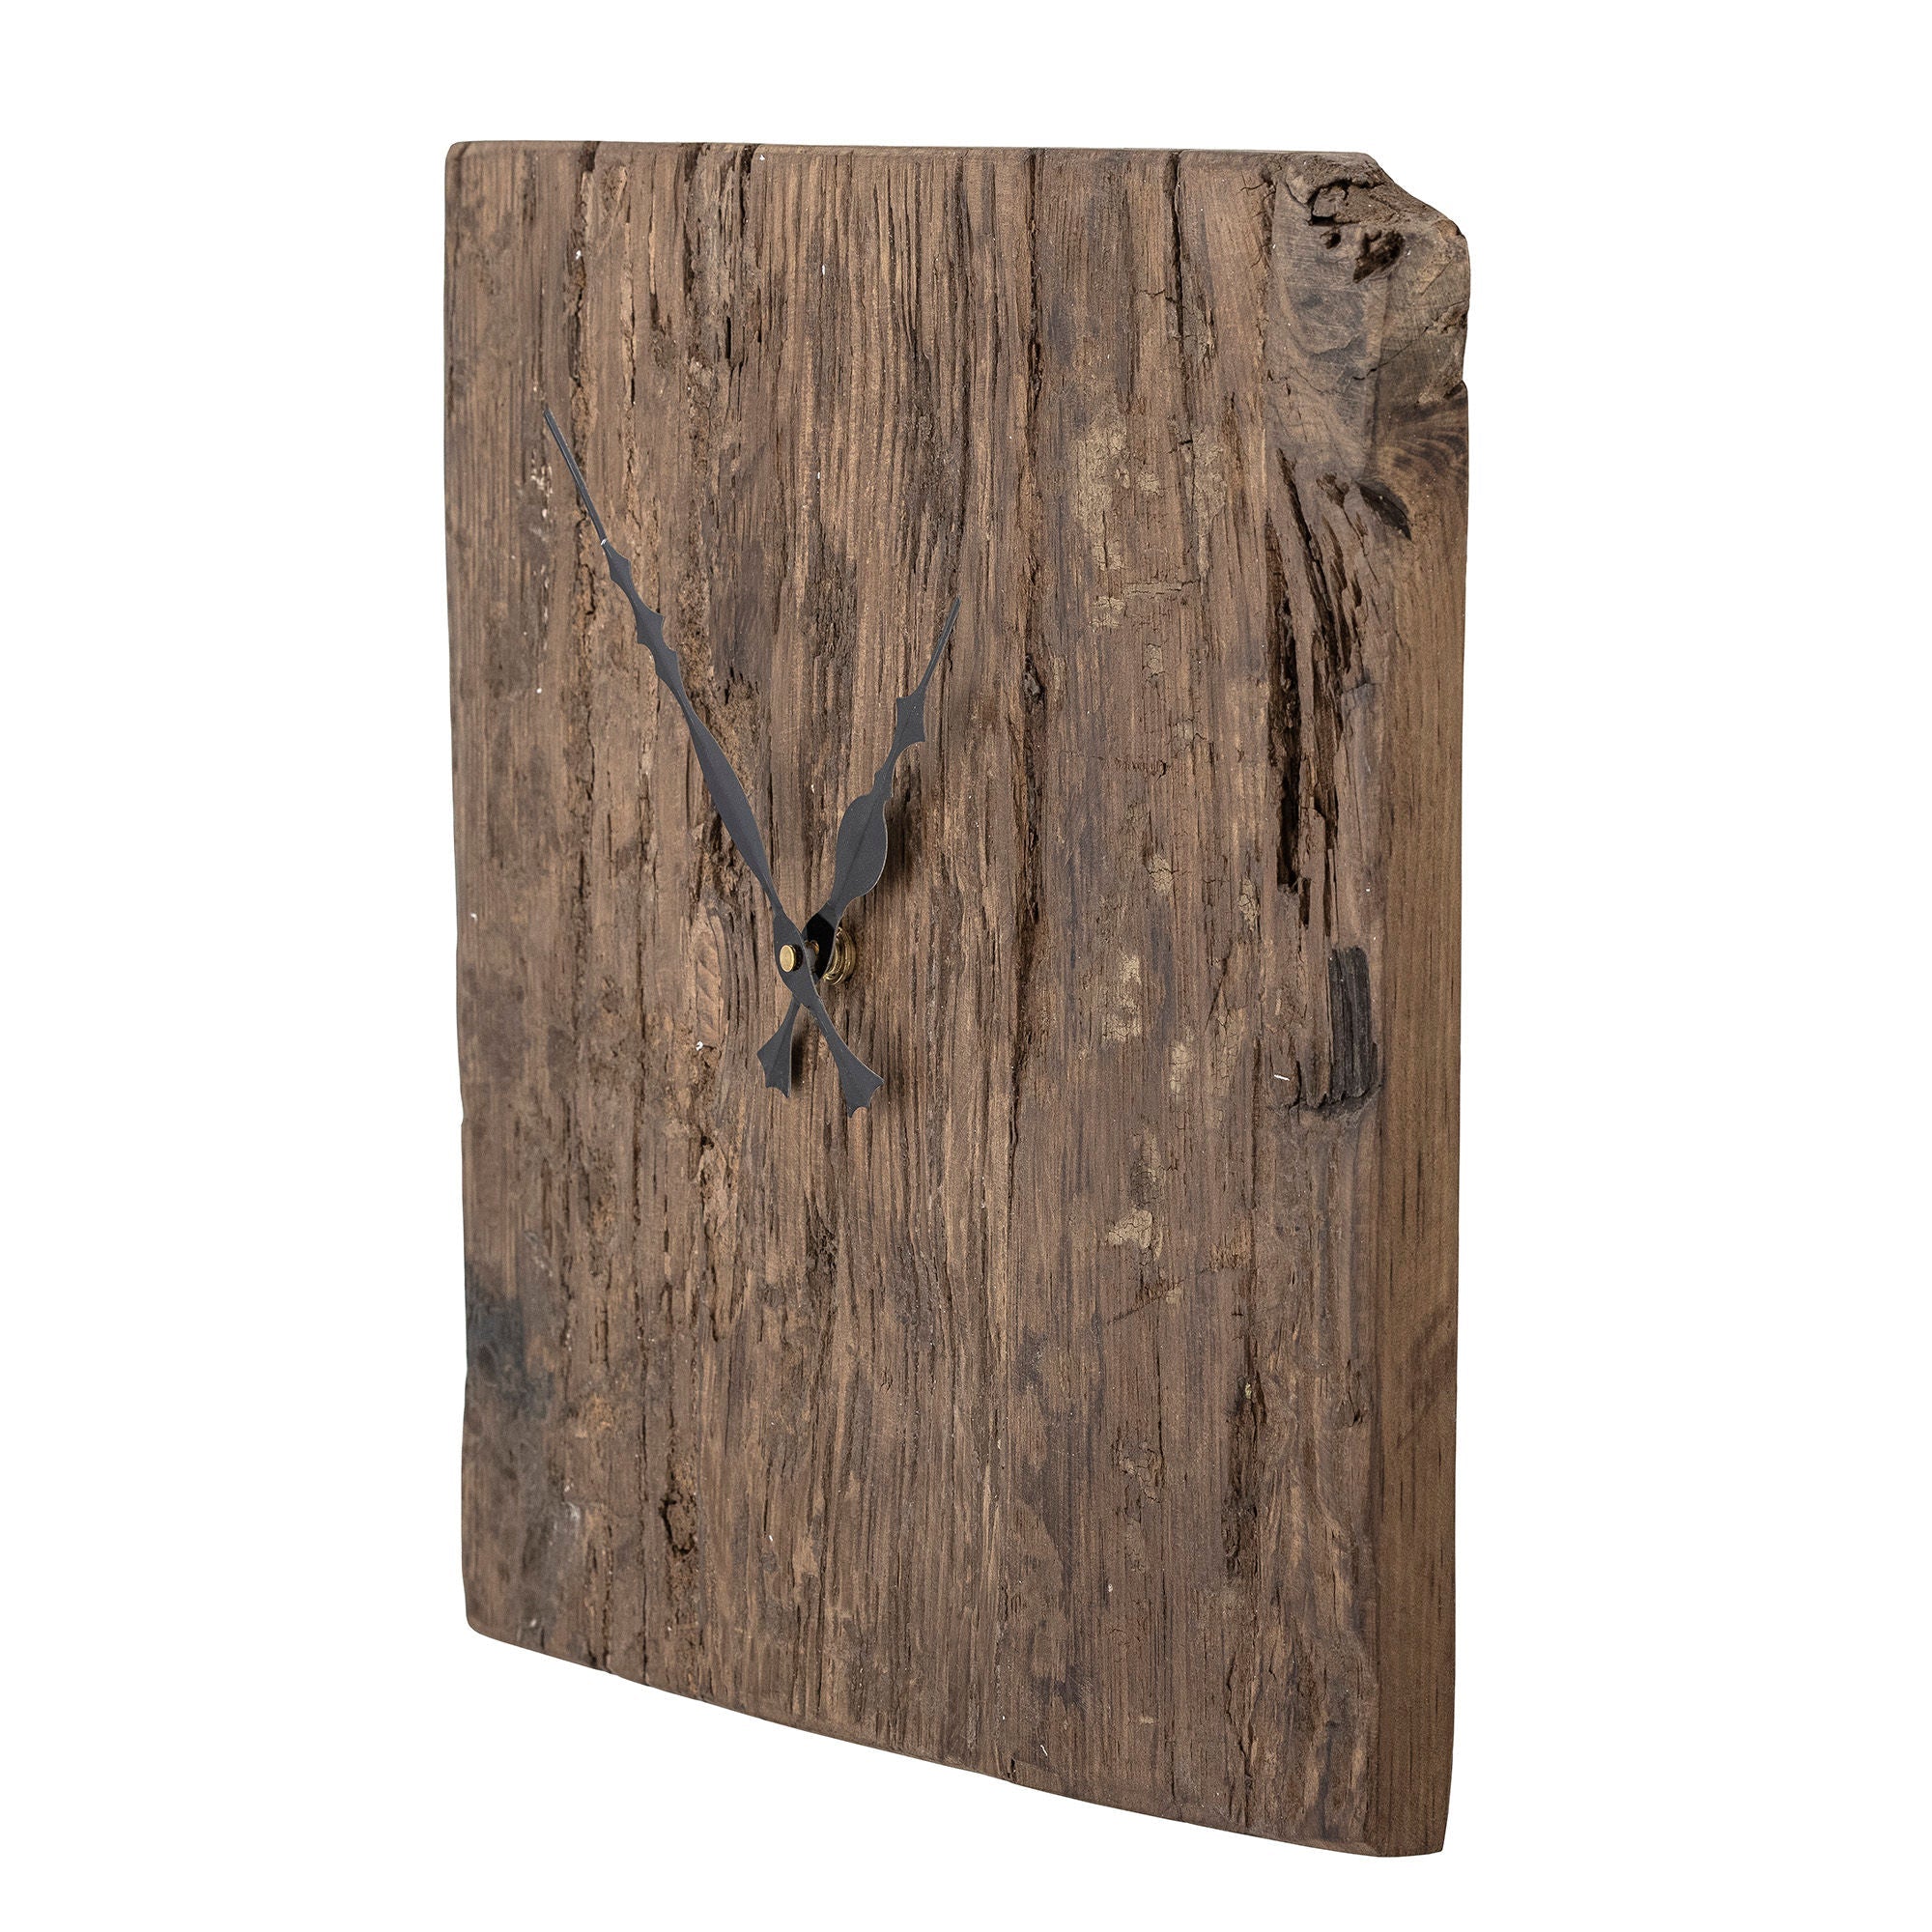 Creative Collection Sarai Wall Clock, Brown, Reclaimed Wood